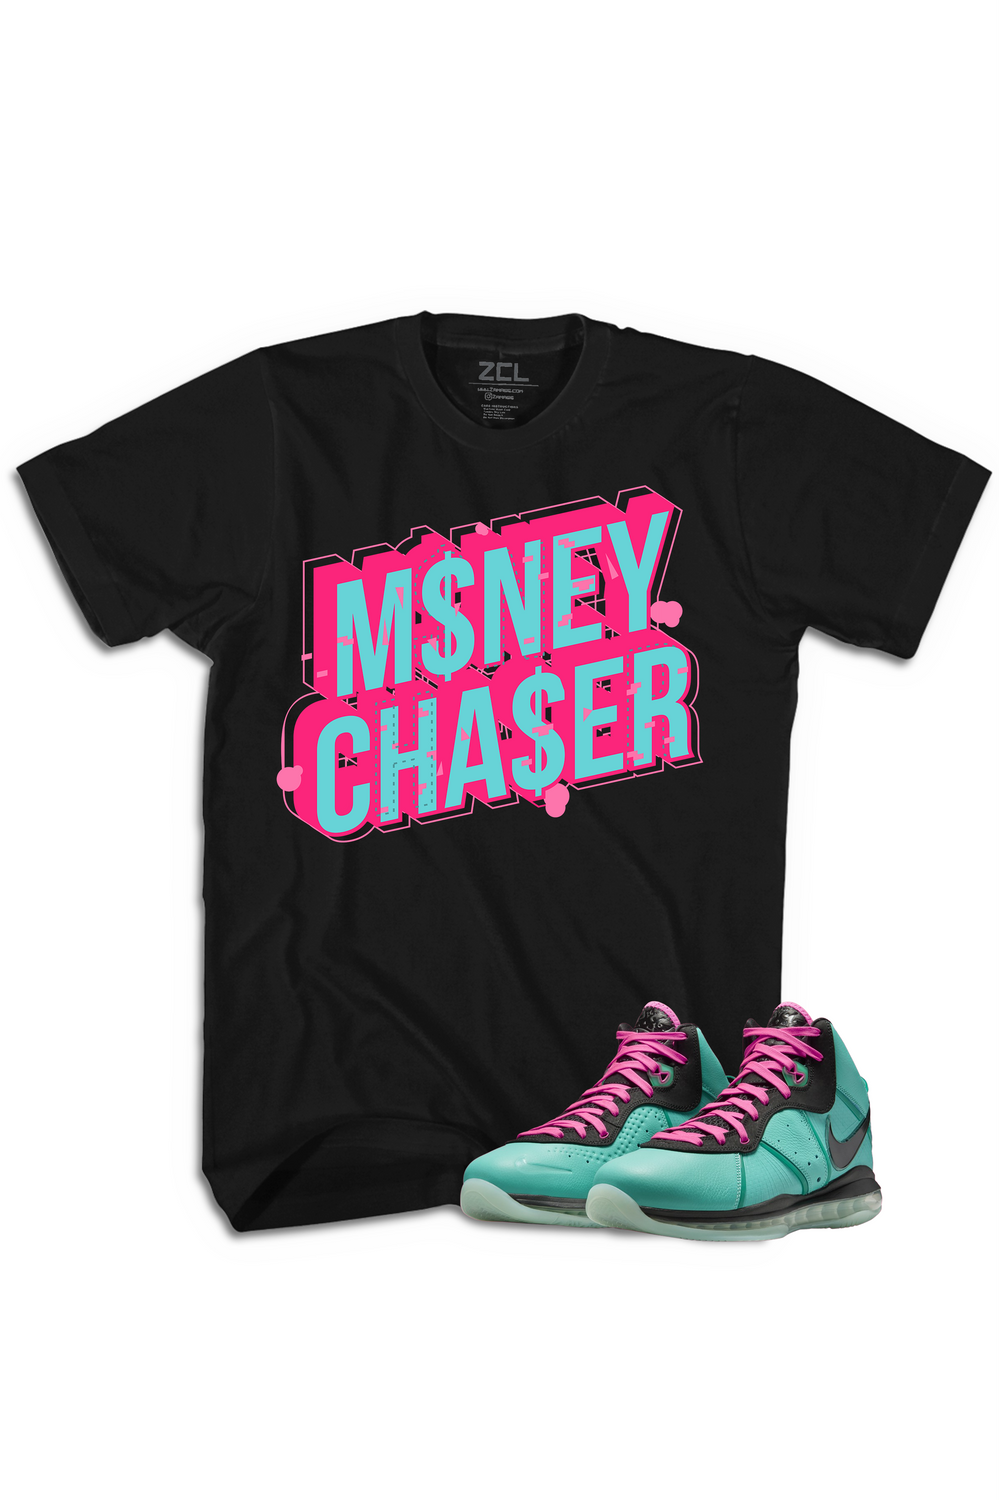 Nike Lebron 8 "Money Chaser" Tee South Beach 2021 - Zamage